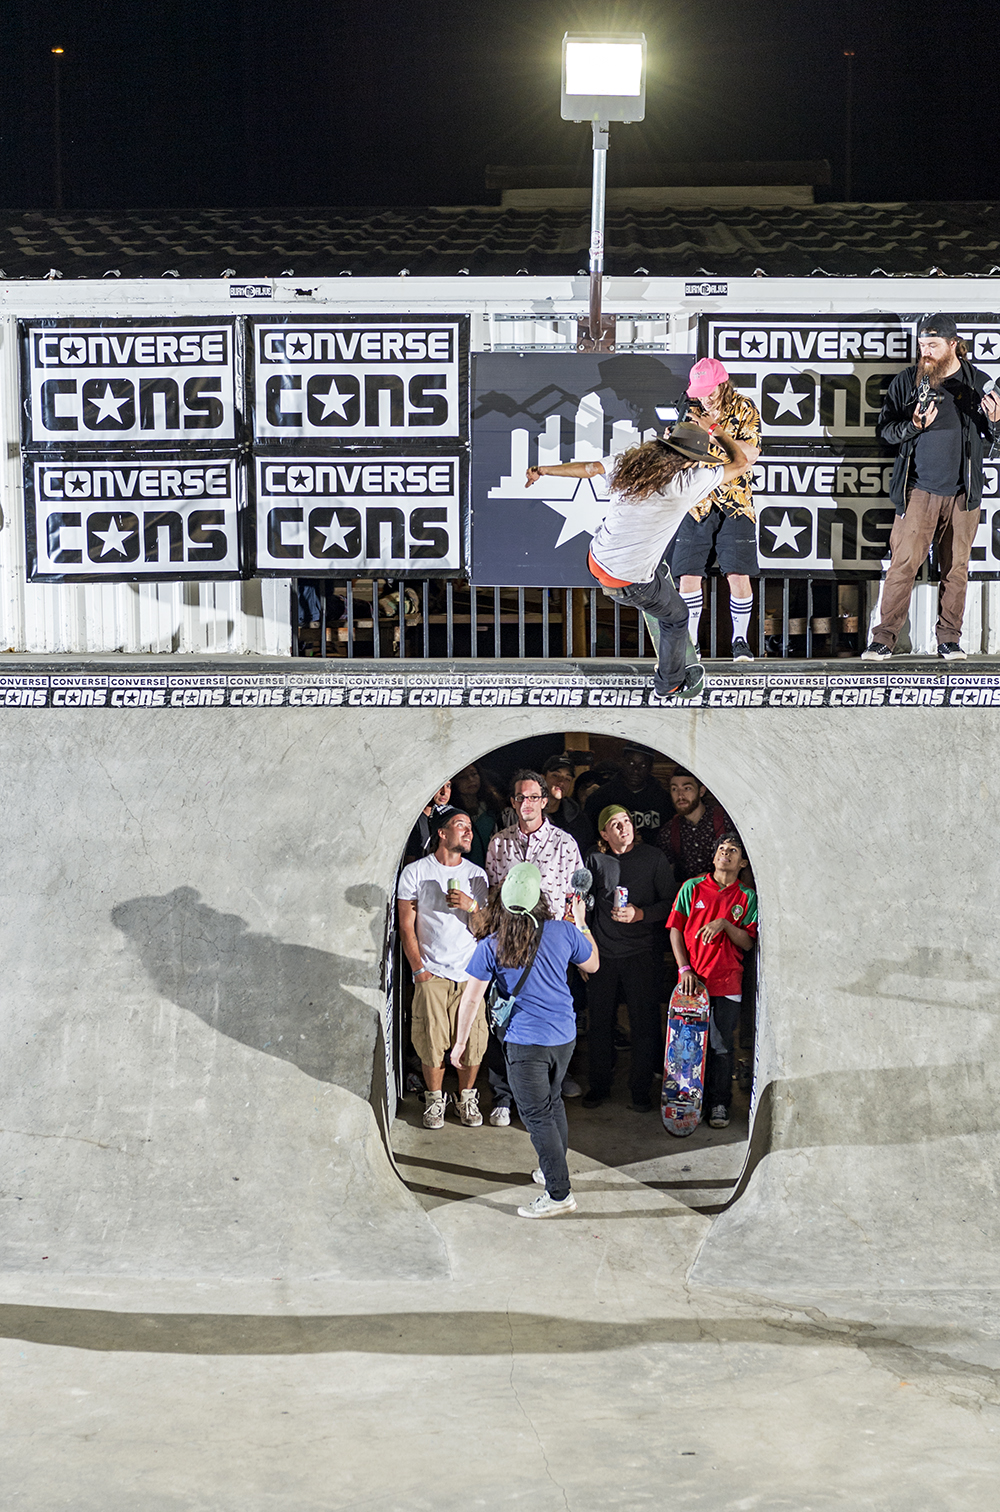 Tampa Pro 2018 Converse Concrete Jam Photos